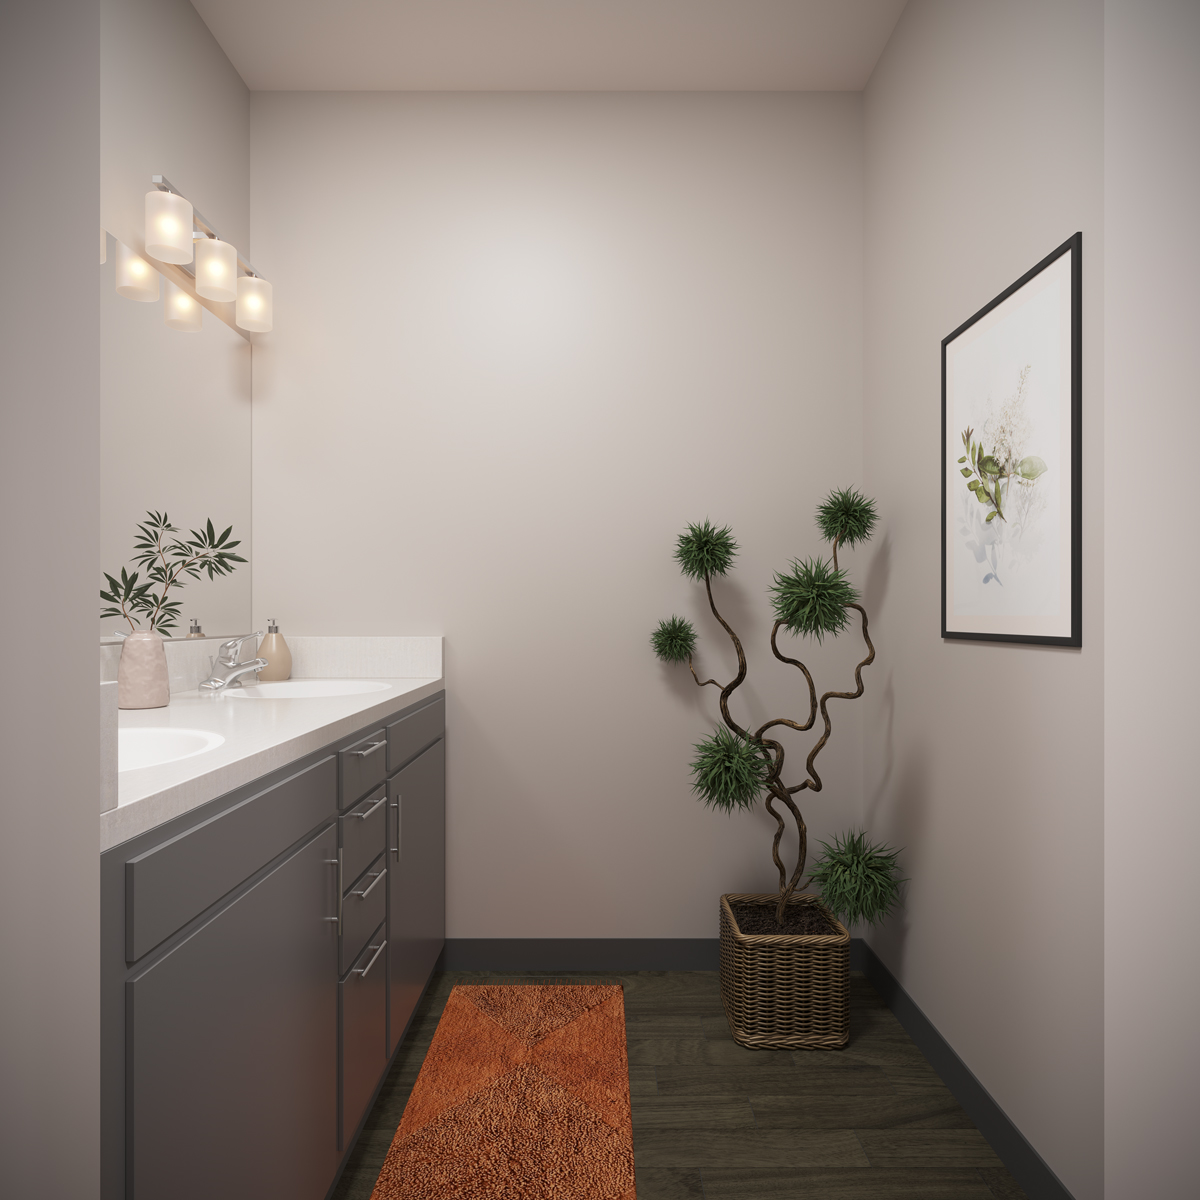 Furnished apartment bathroom